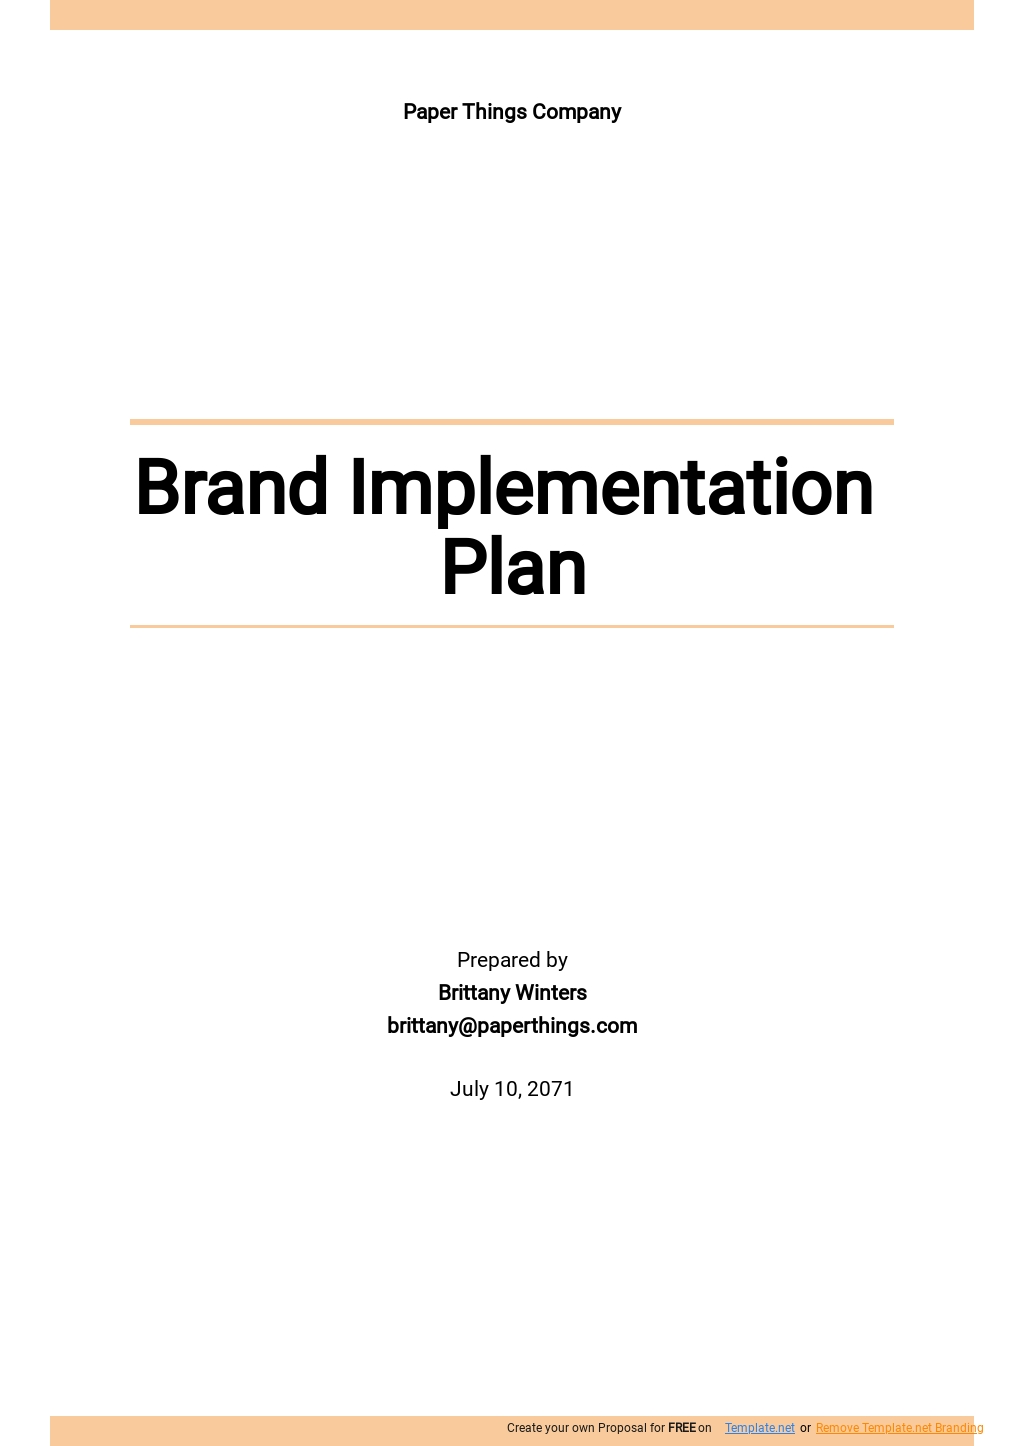 Brand Implementation Plan Template.jpe